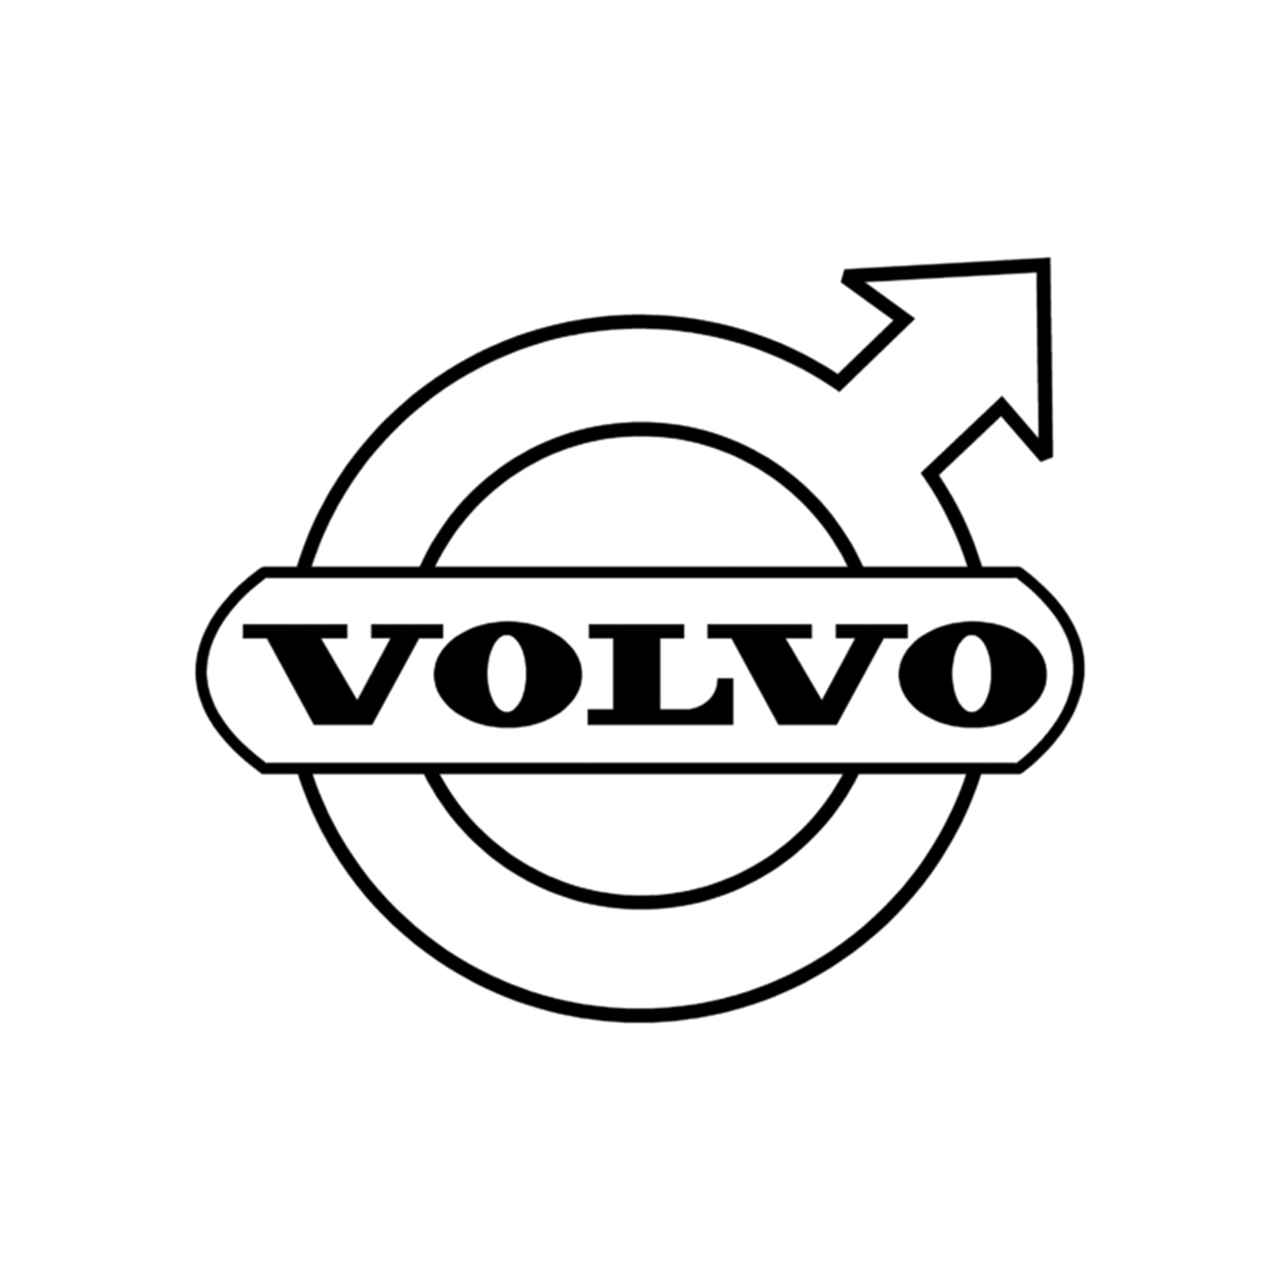 Old Volvo Logo - Volvo Old Vinyl Decal